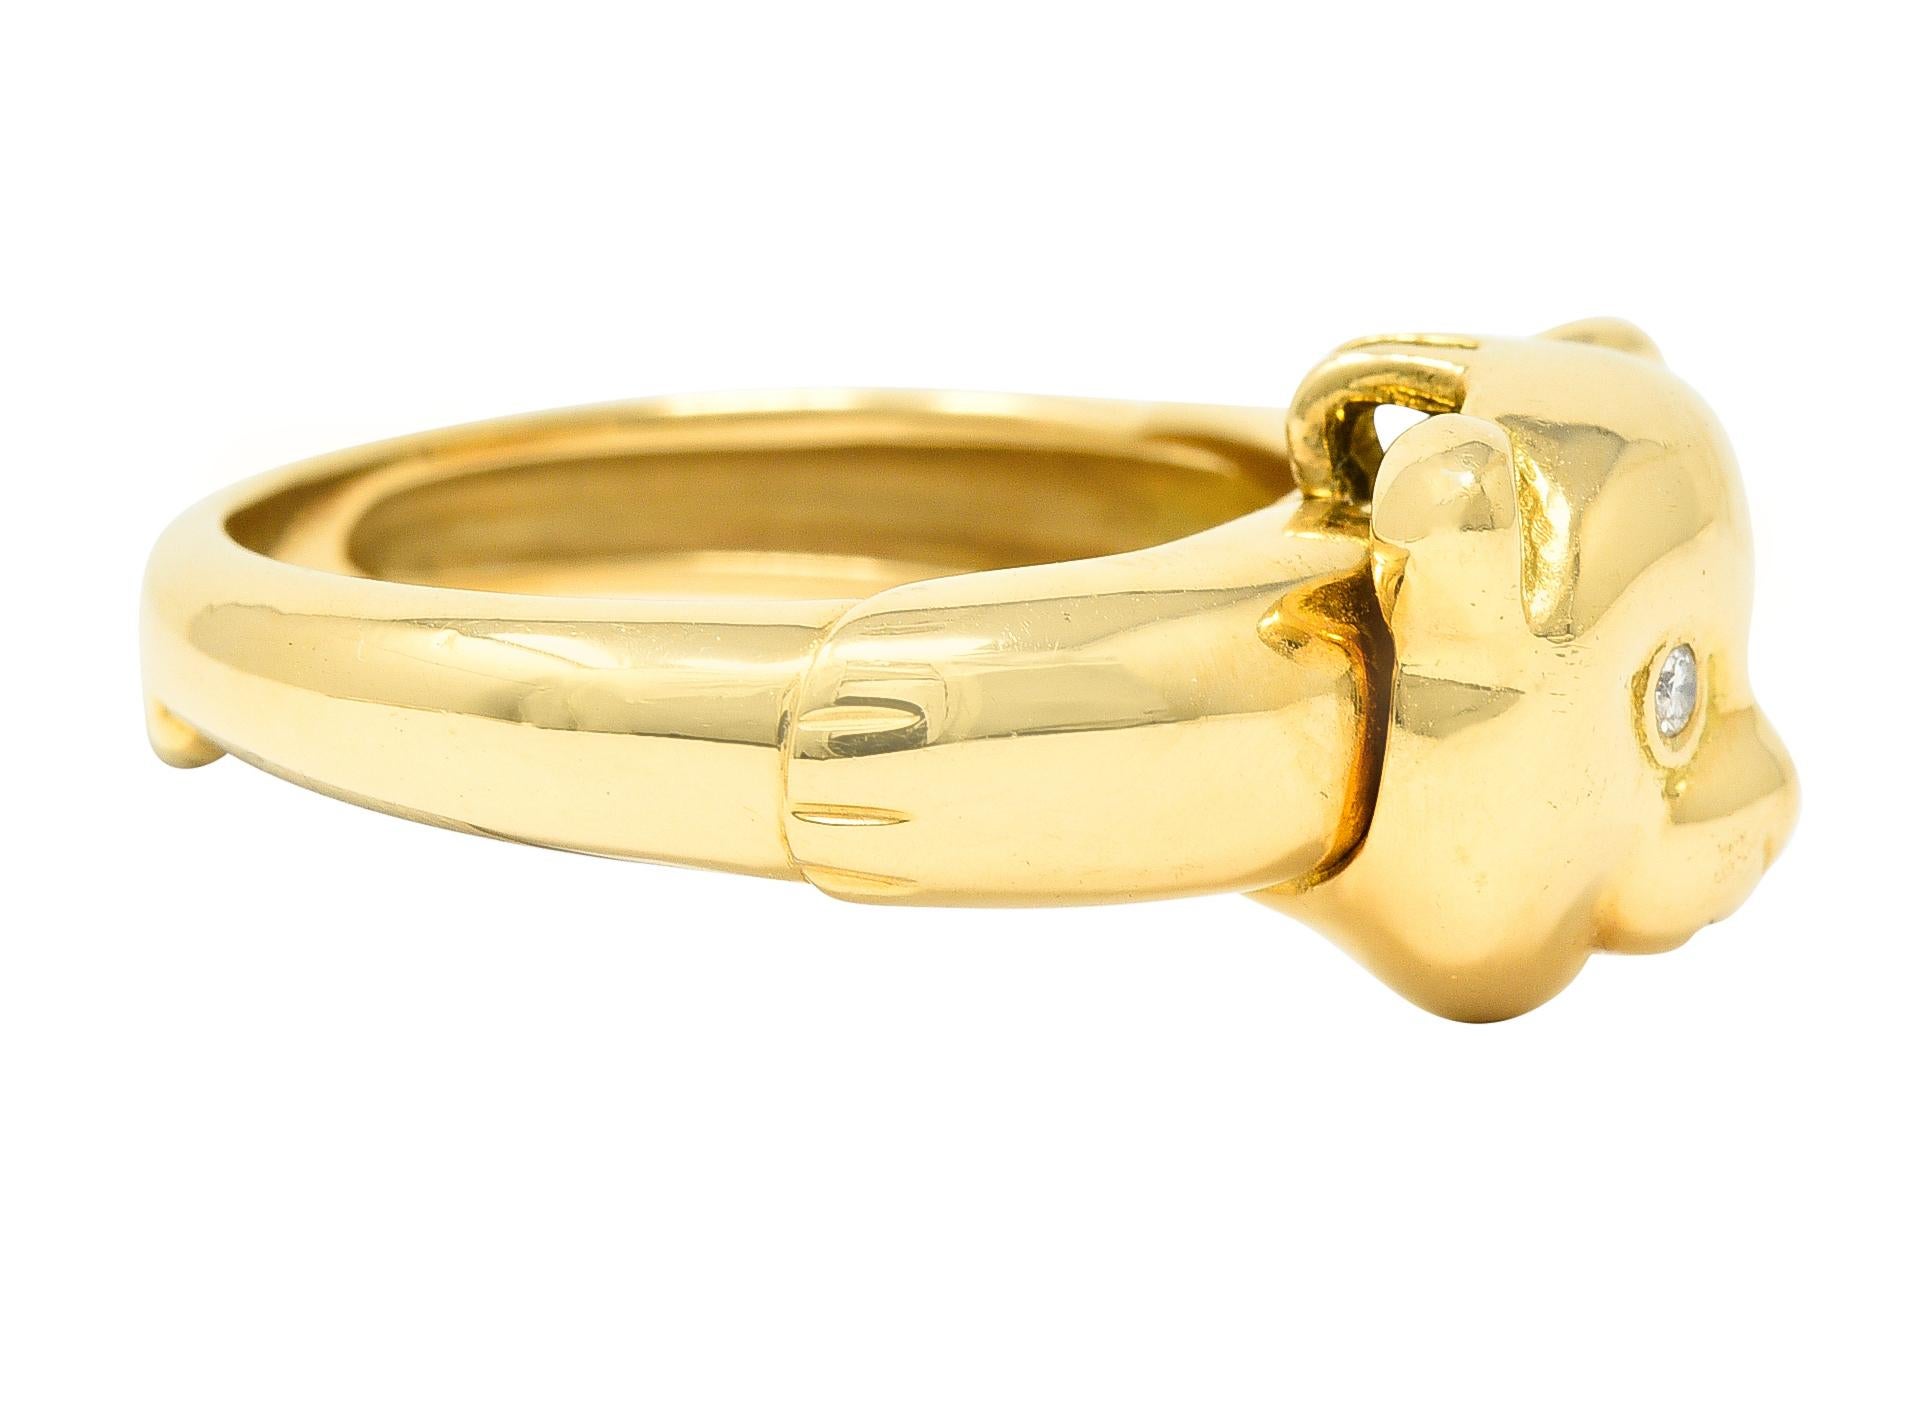 Brilliant Cut Van Cleef & Arpels French Diamond 18 Karat Gold Teddy Bear Pendant Vintage Ring